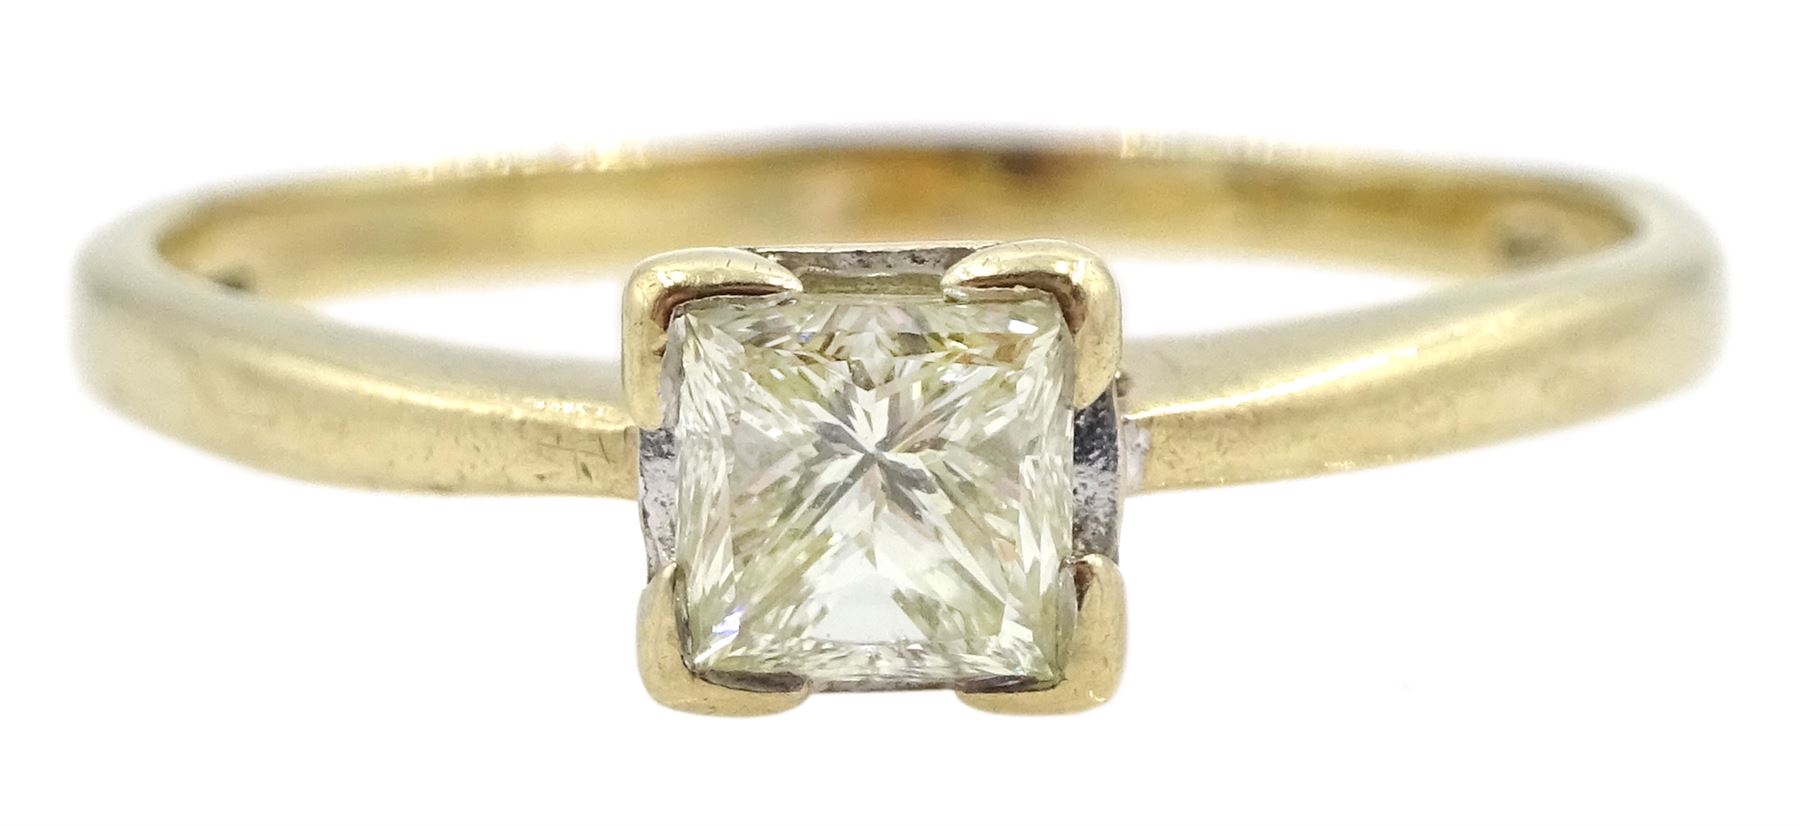 9ct gold single stone princess cut diamond ring